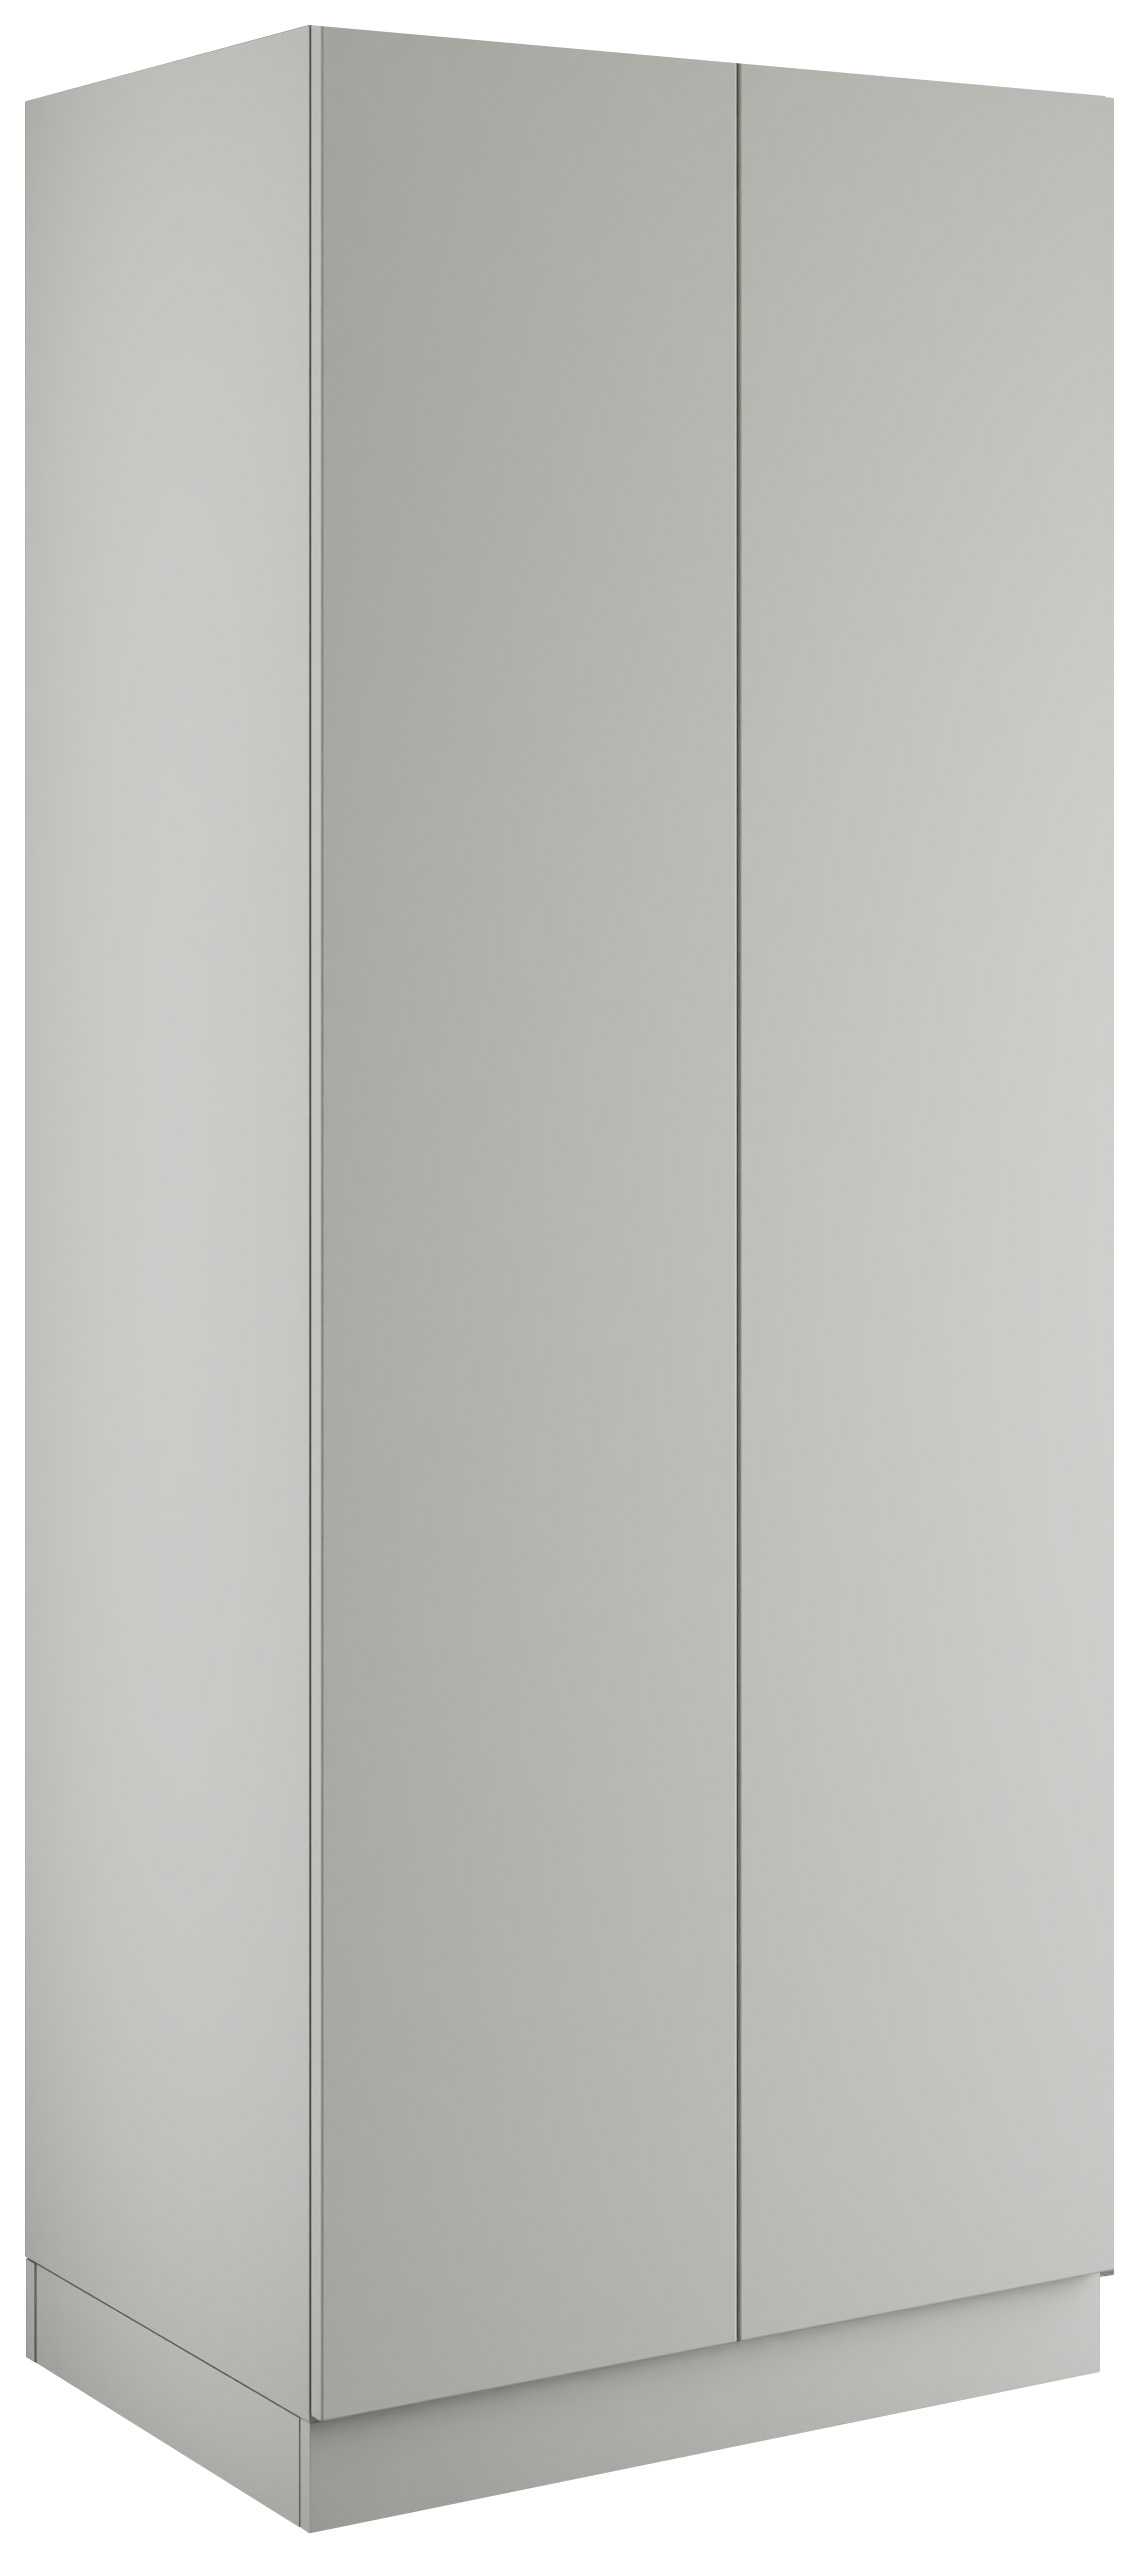 Malton Light Grey Double Wardrobe with Single Rail & Shelves - 900 x 2260 x 608mm